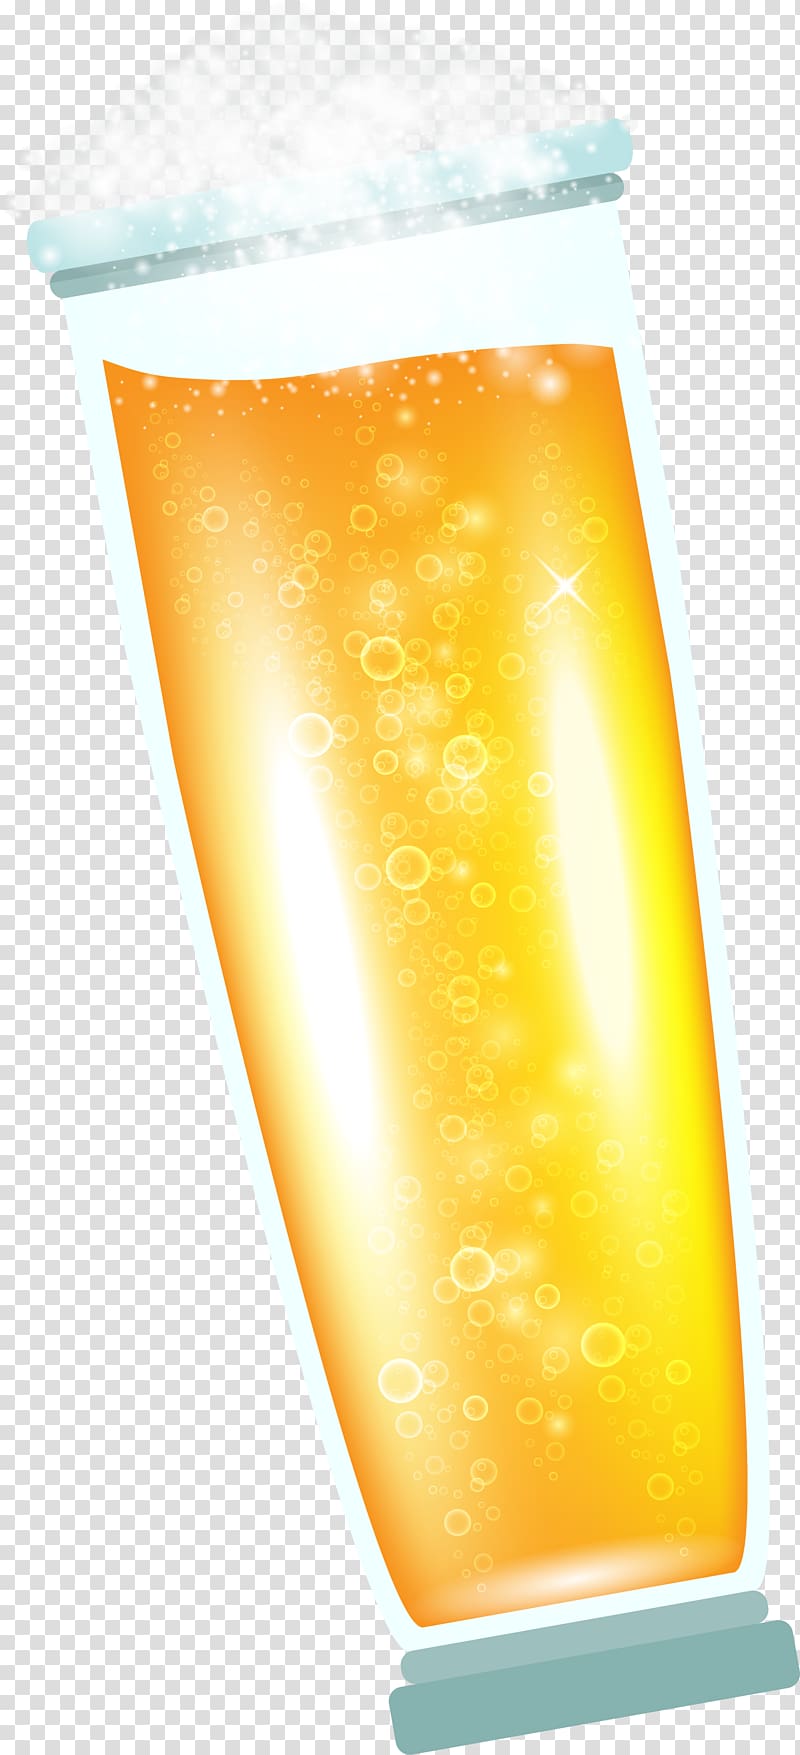 Gold Gratis, Golden Delicious beer transparent background PNG clipart